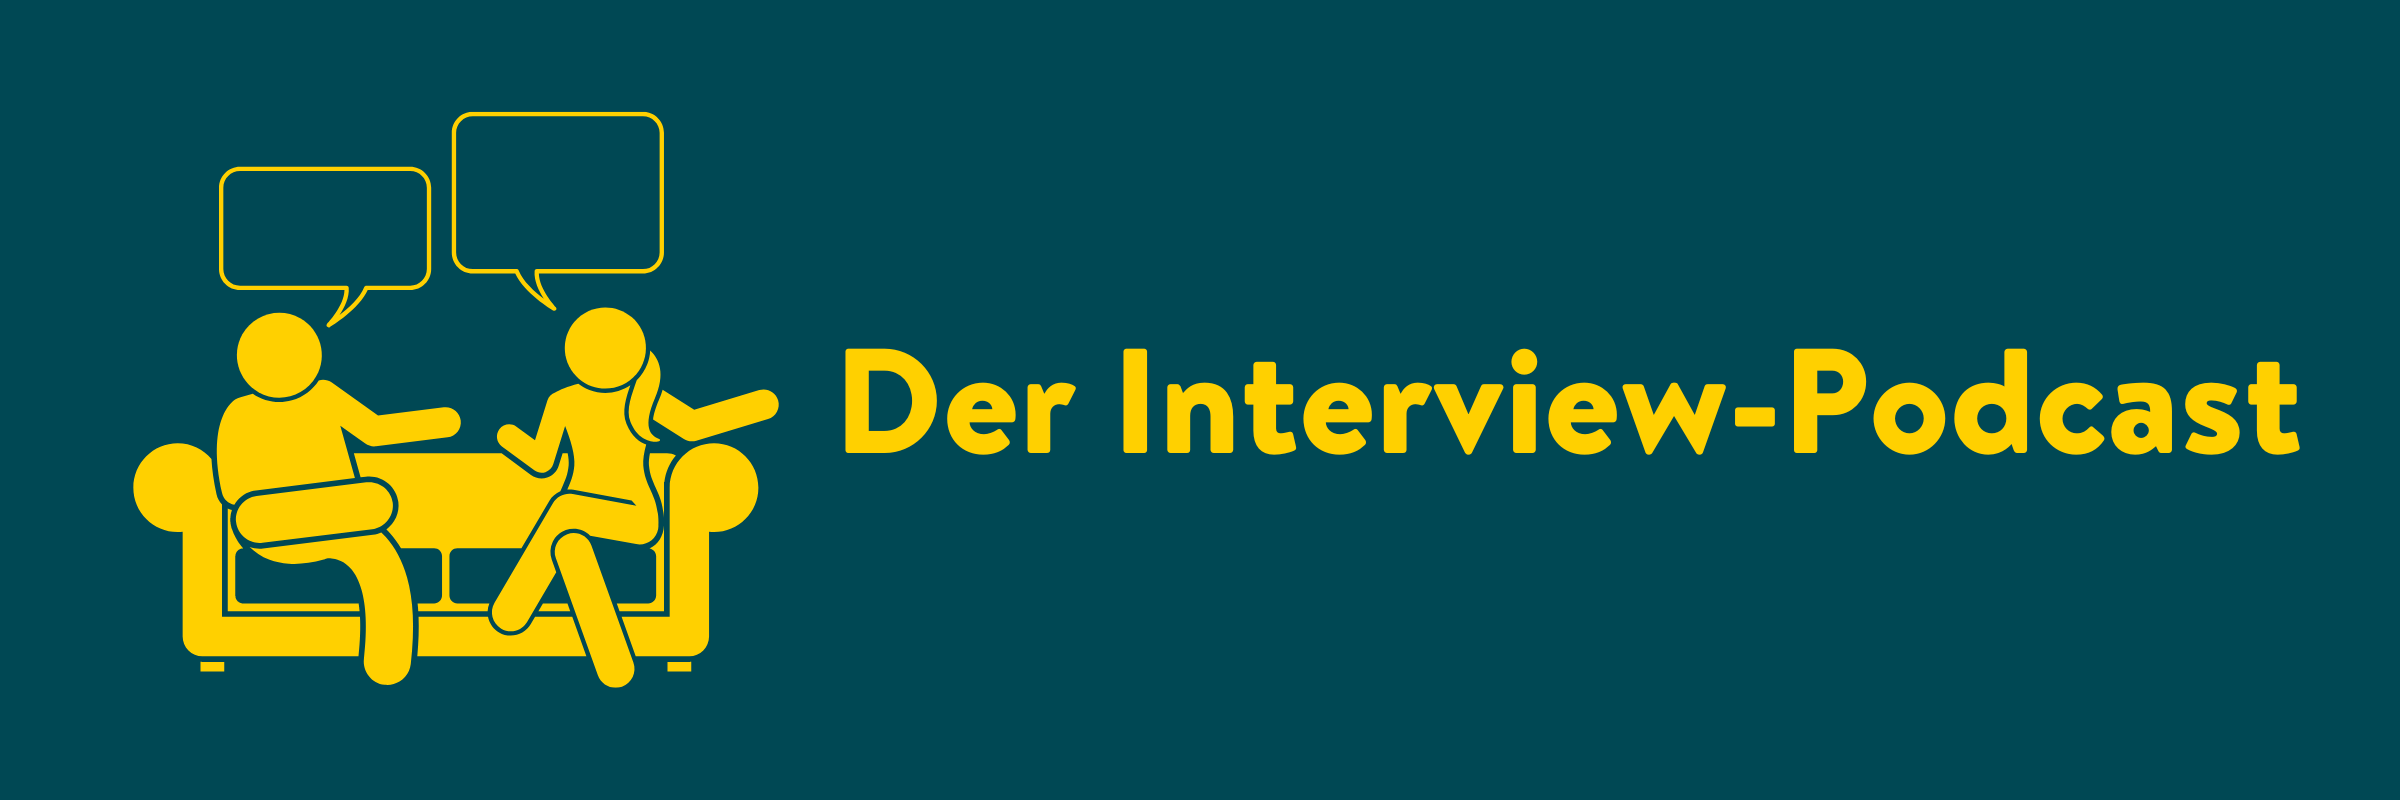 Der Interview-Podcast - podcast-formate